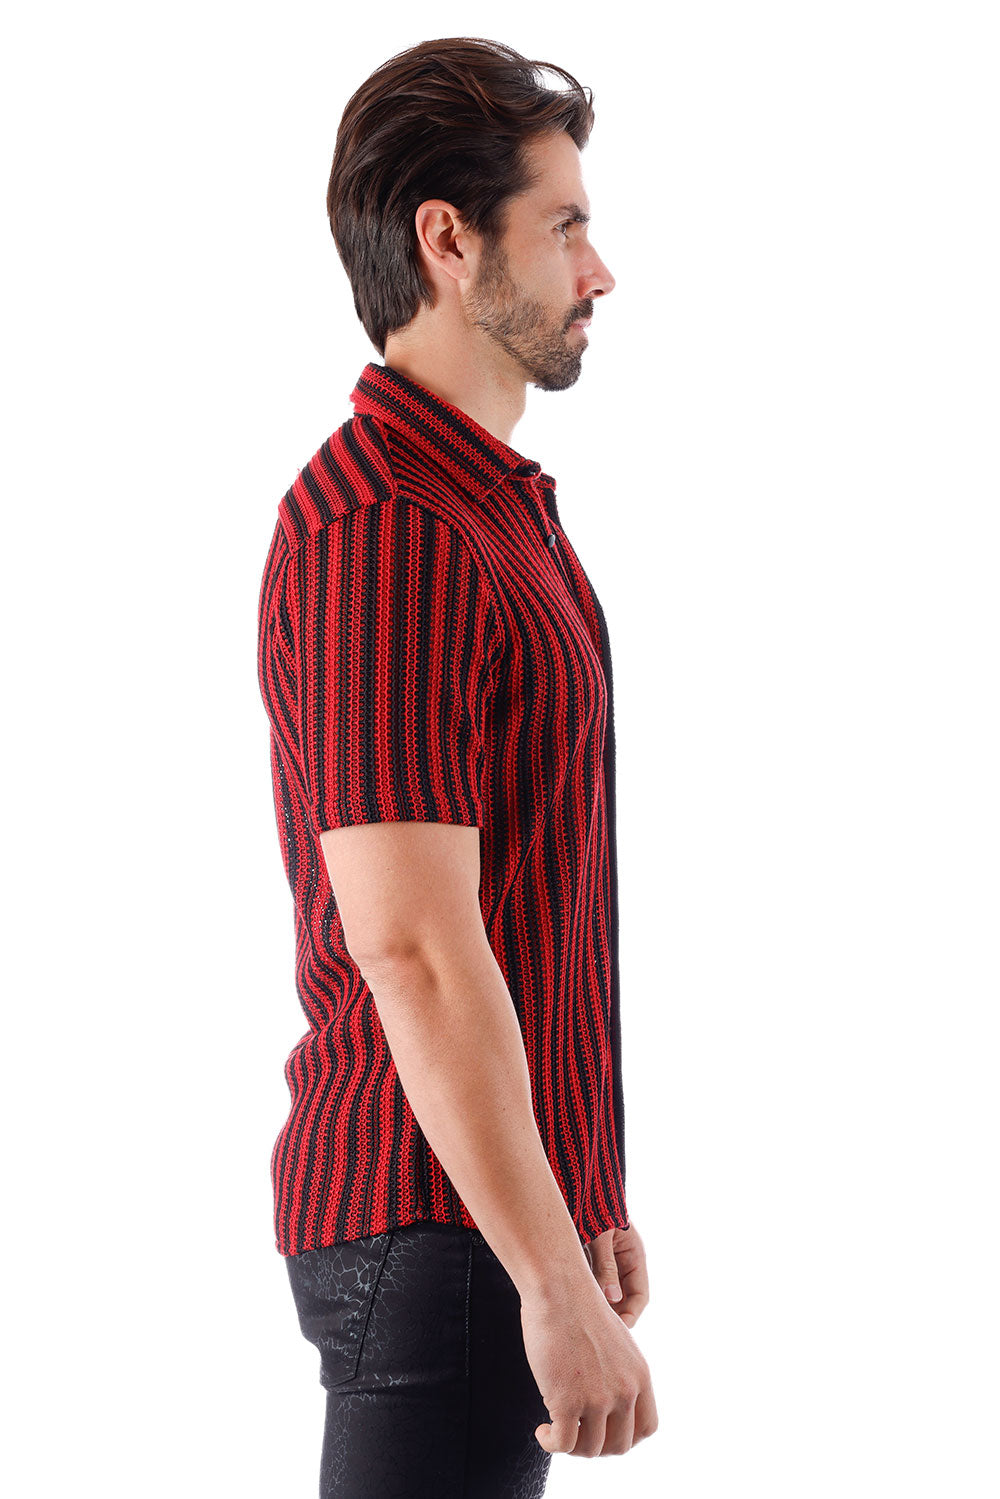 BARABAS Men's Knit See Through Short Sleeve Shirts 4SST01 Black Red